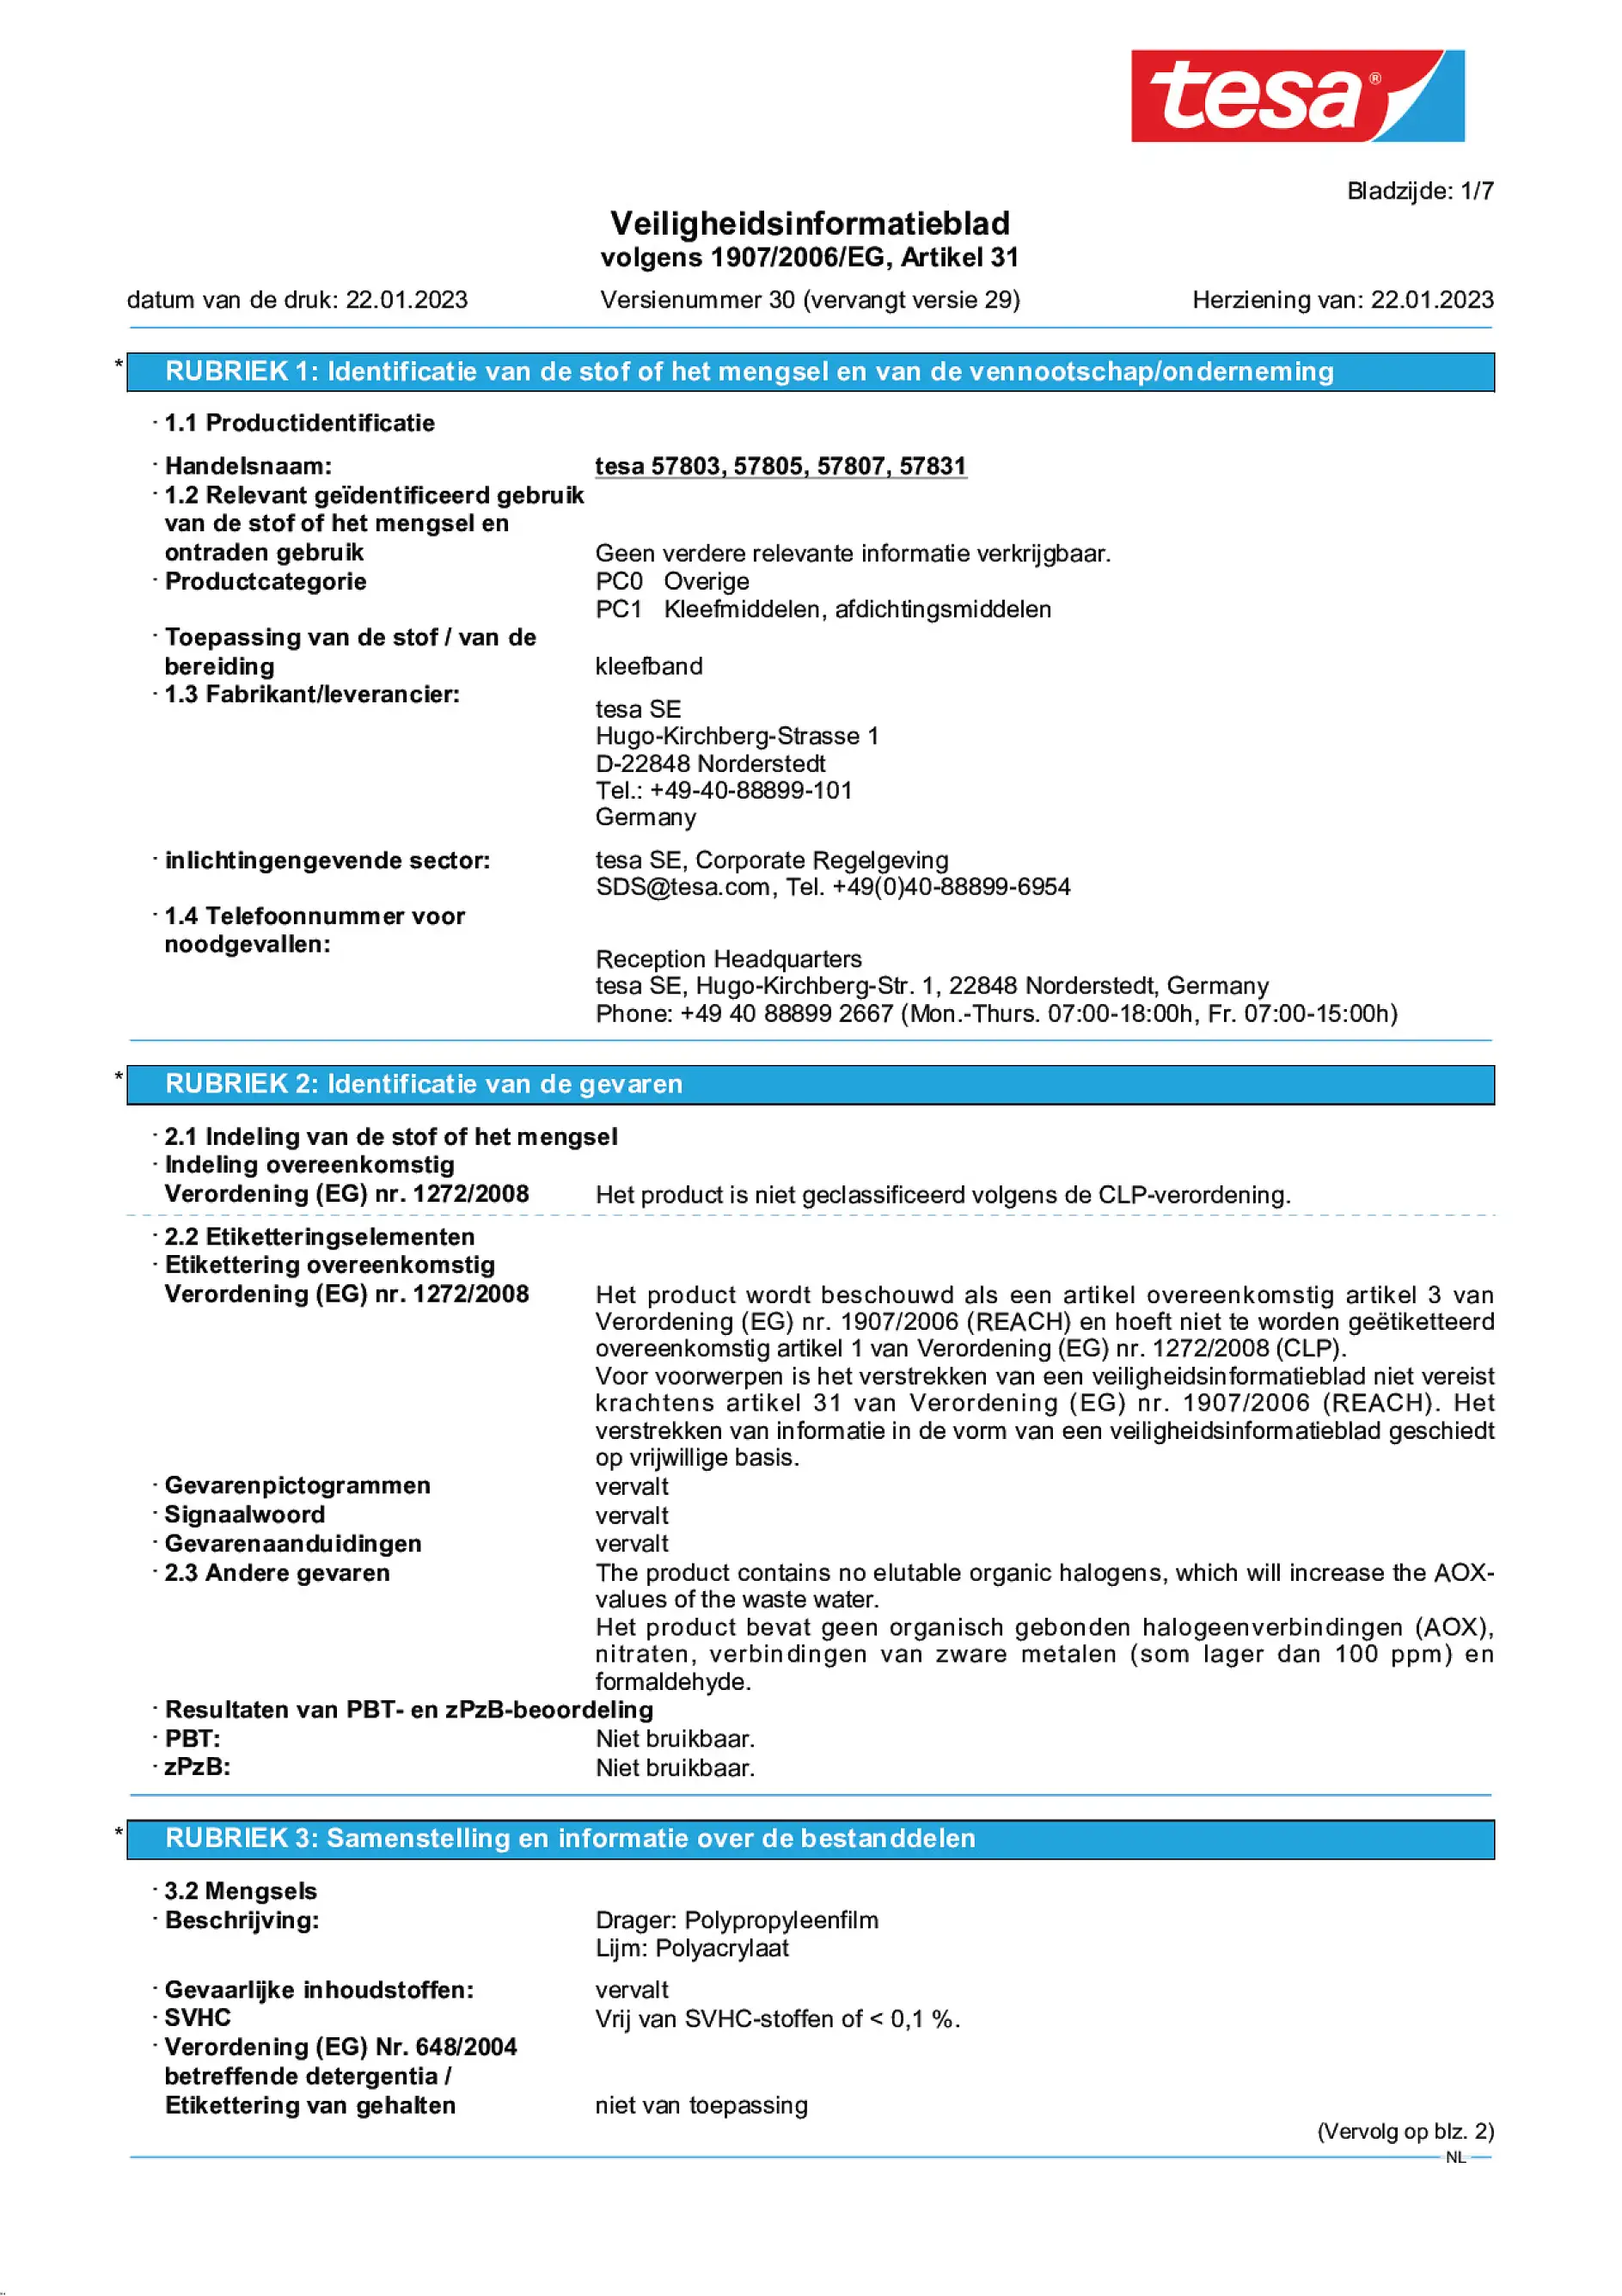 Safety data sheet_tesapack® 57807_nl-NL_v30